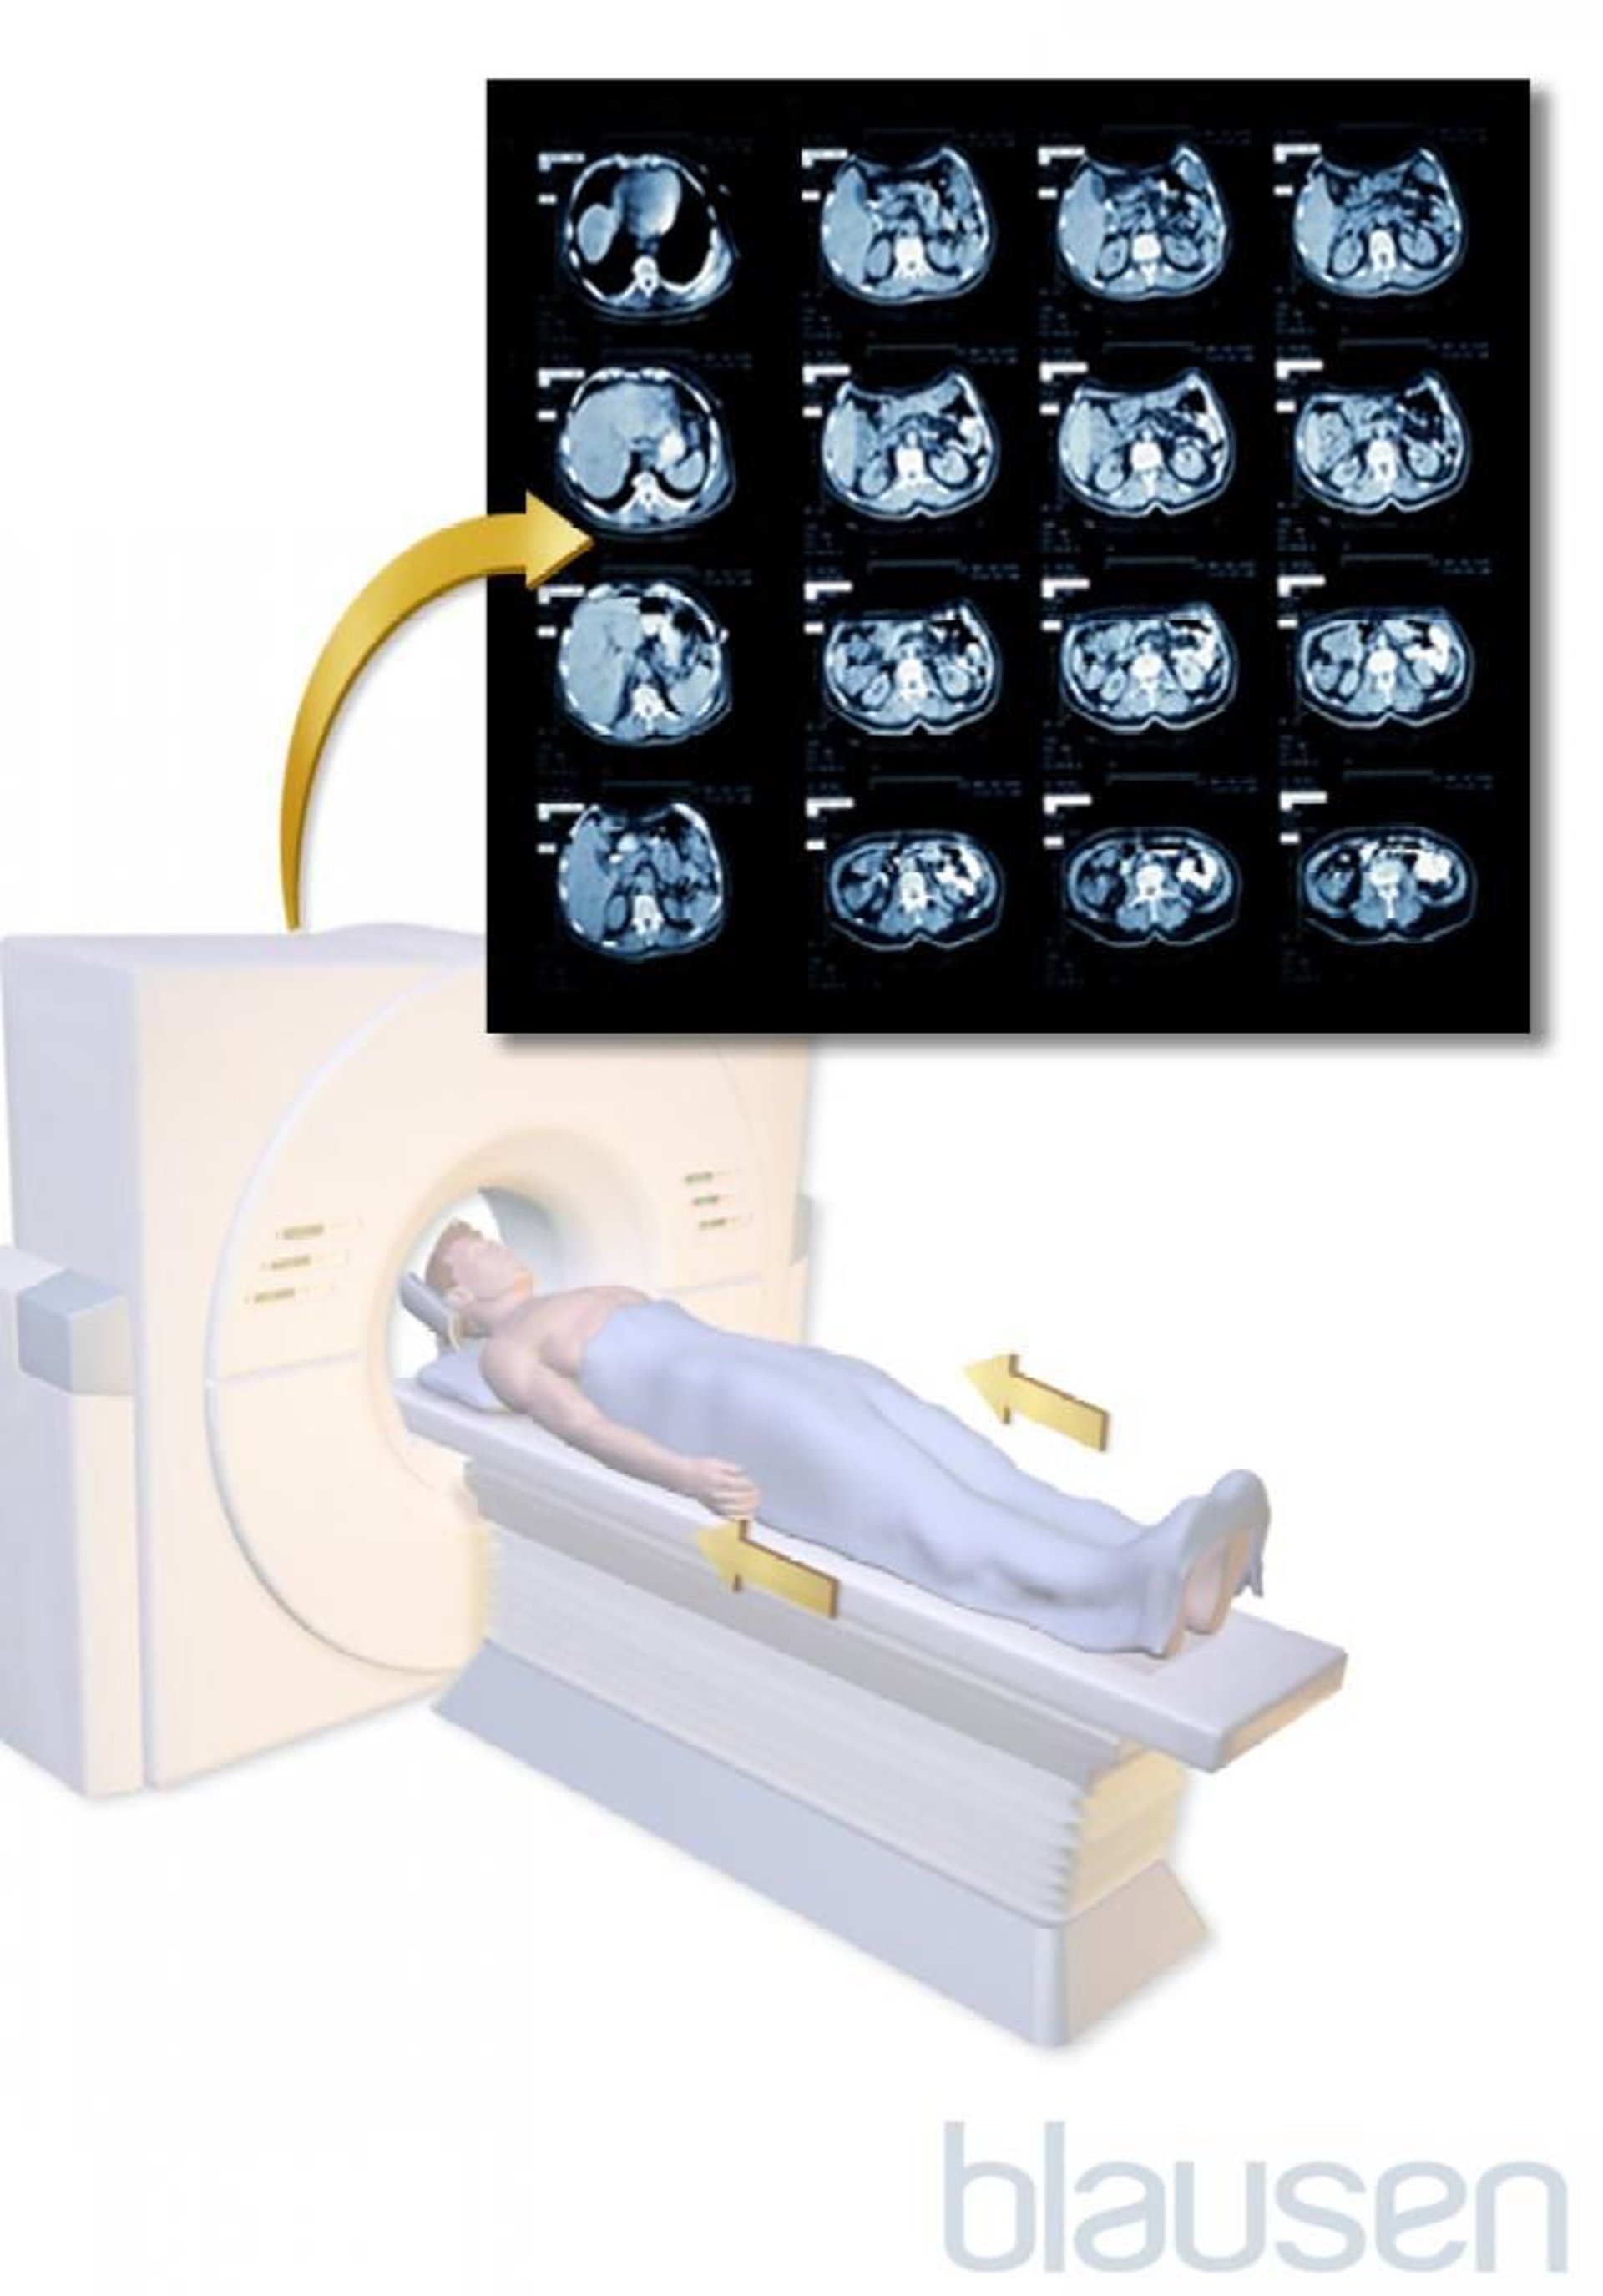 Tomografia computadorizada do abdômen